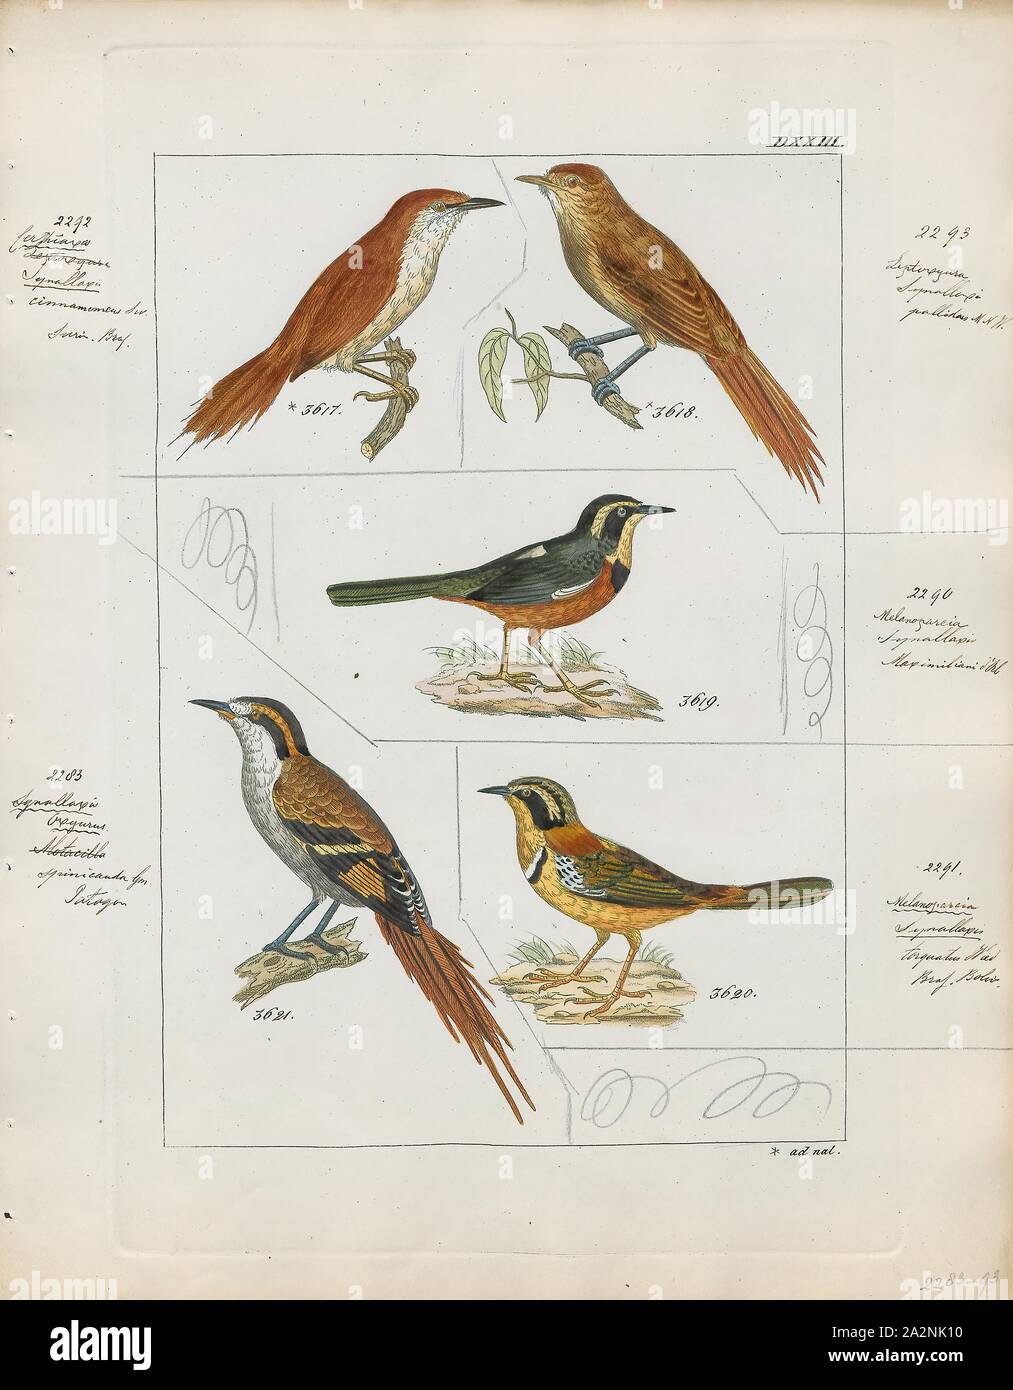 Synallaxis spinicauda, Print, Synallaxis is a genus of birds in the ovenbird family, Furnariidae., 1820-1860 Stock Photo